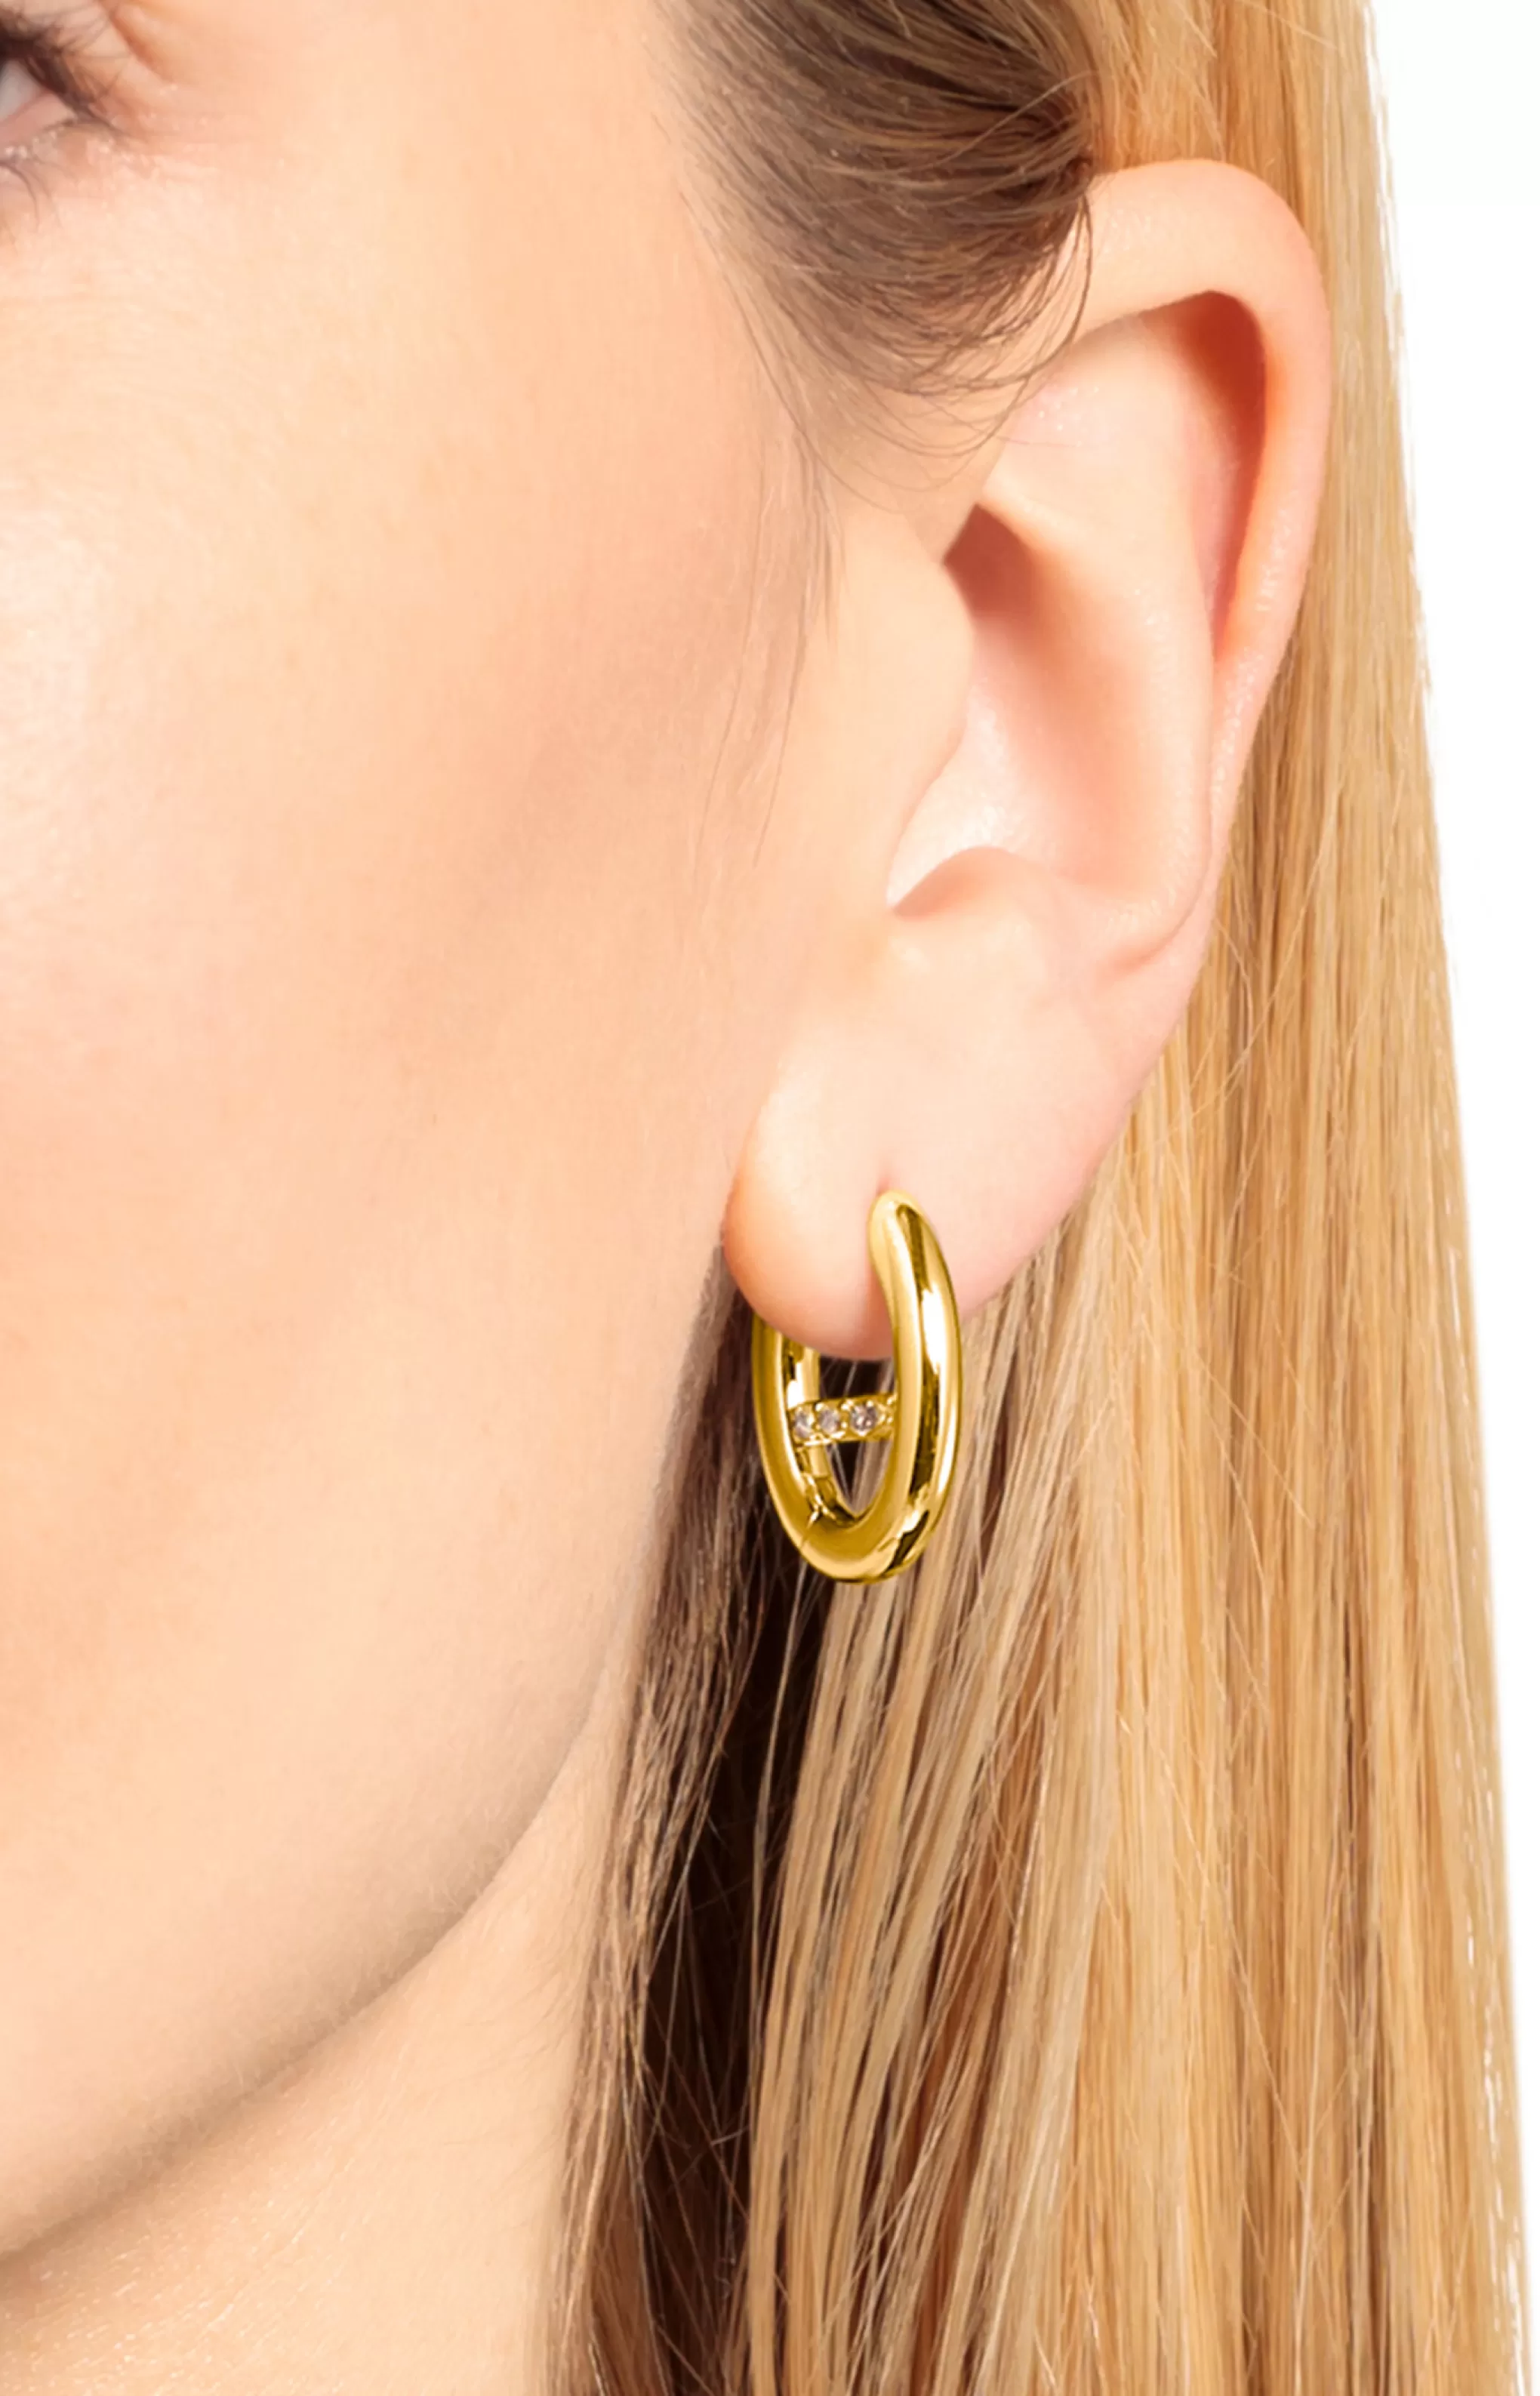 Earrings | Jewellery*JOOP Earrings | Jewellery Hoop Earrings in